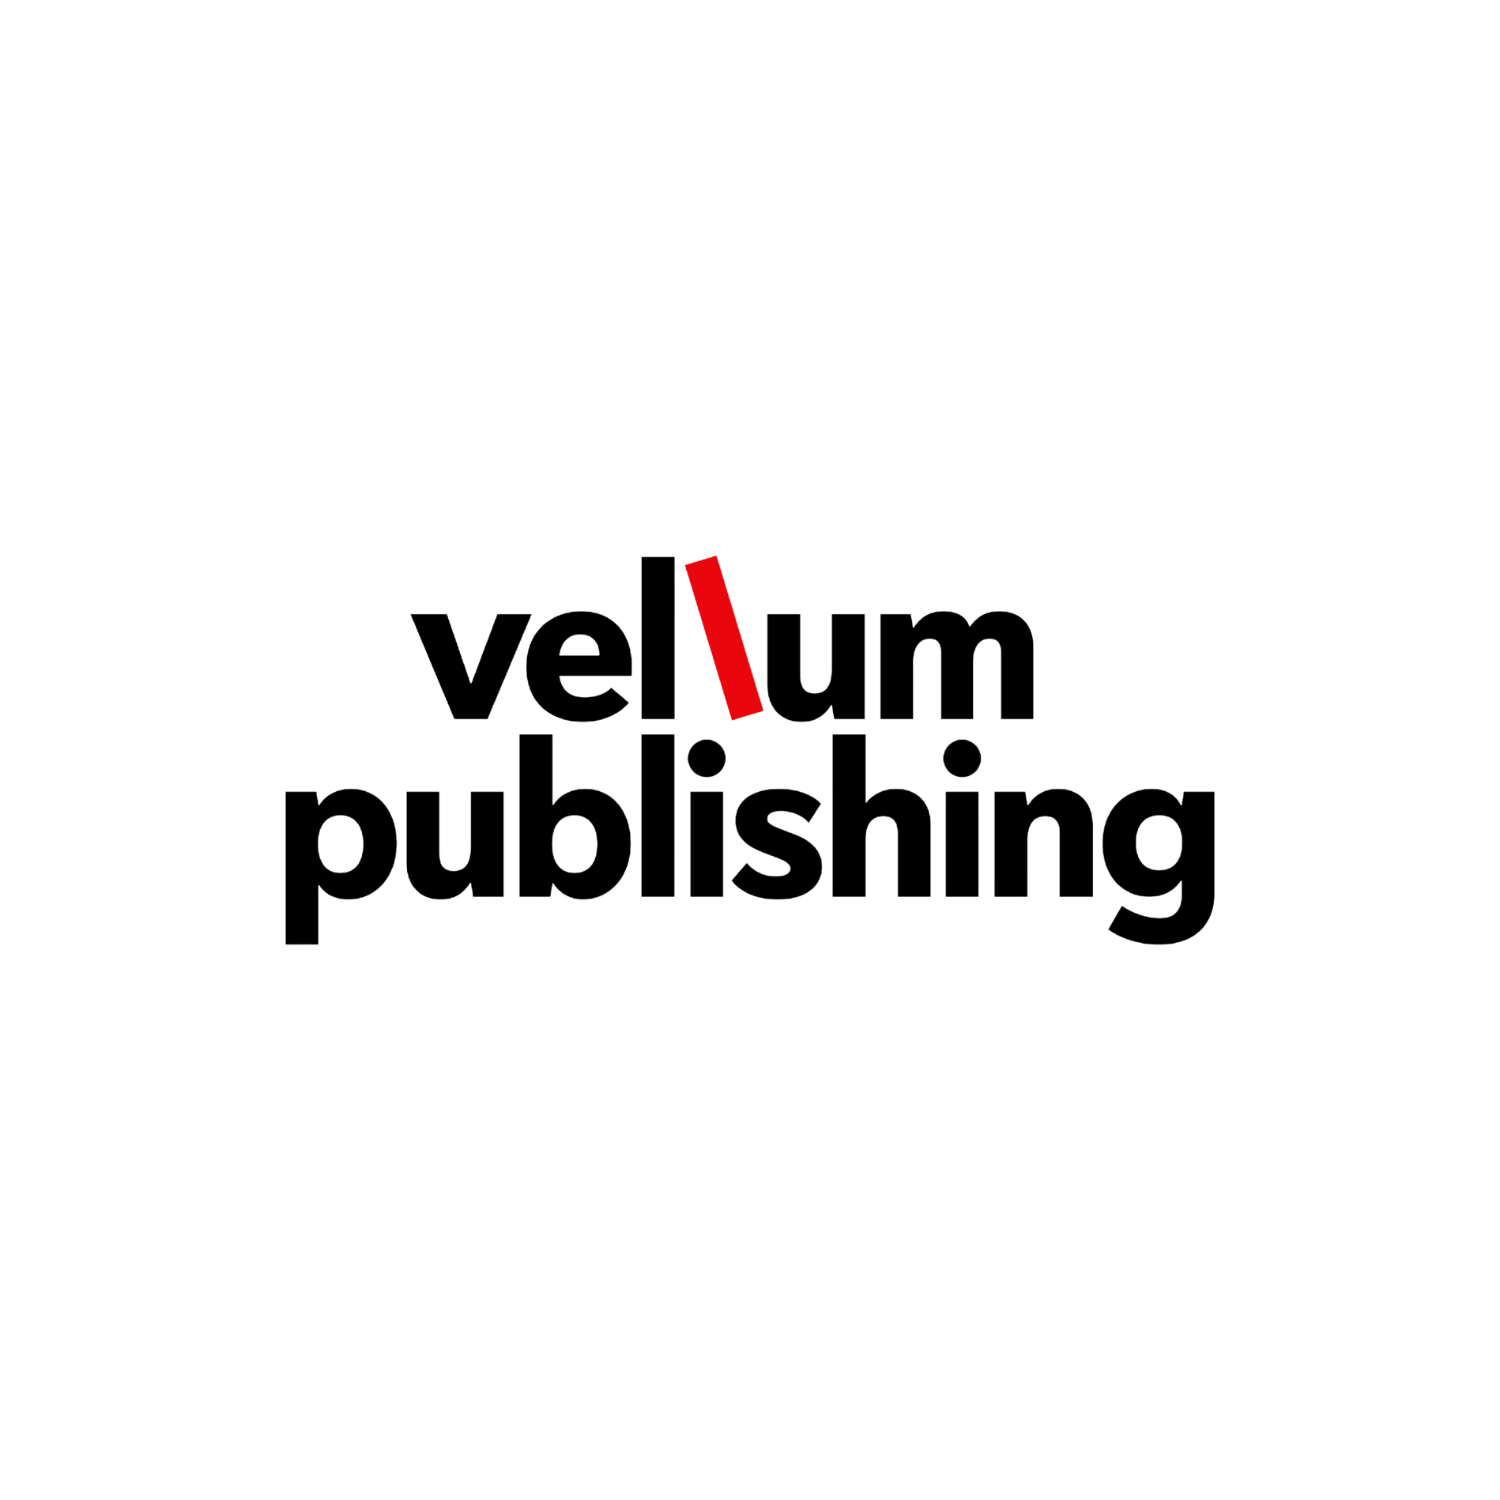 Vellum Publishing